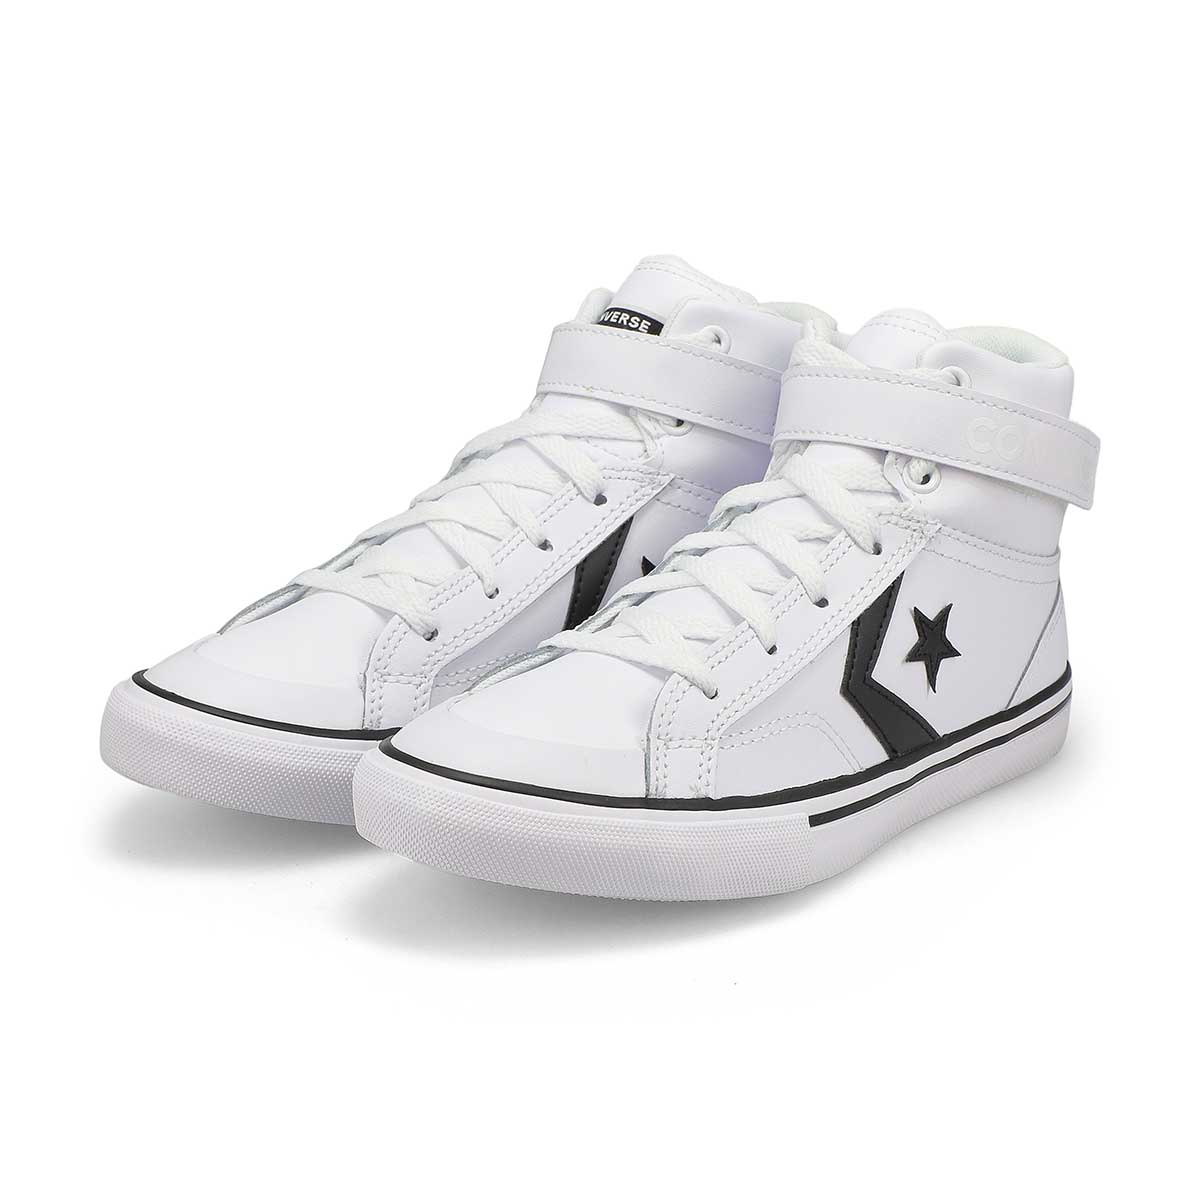 Boy's Chuck Taylor All Star Pro Blaze Strap Leather Sneaker - White/Black